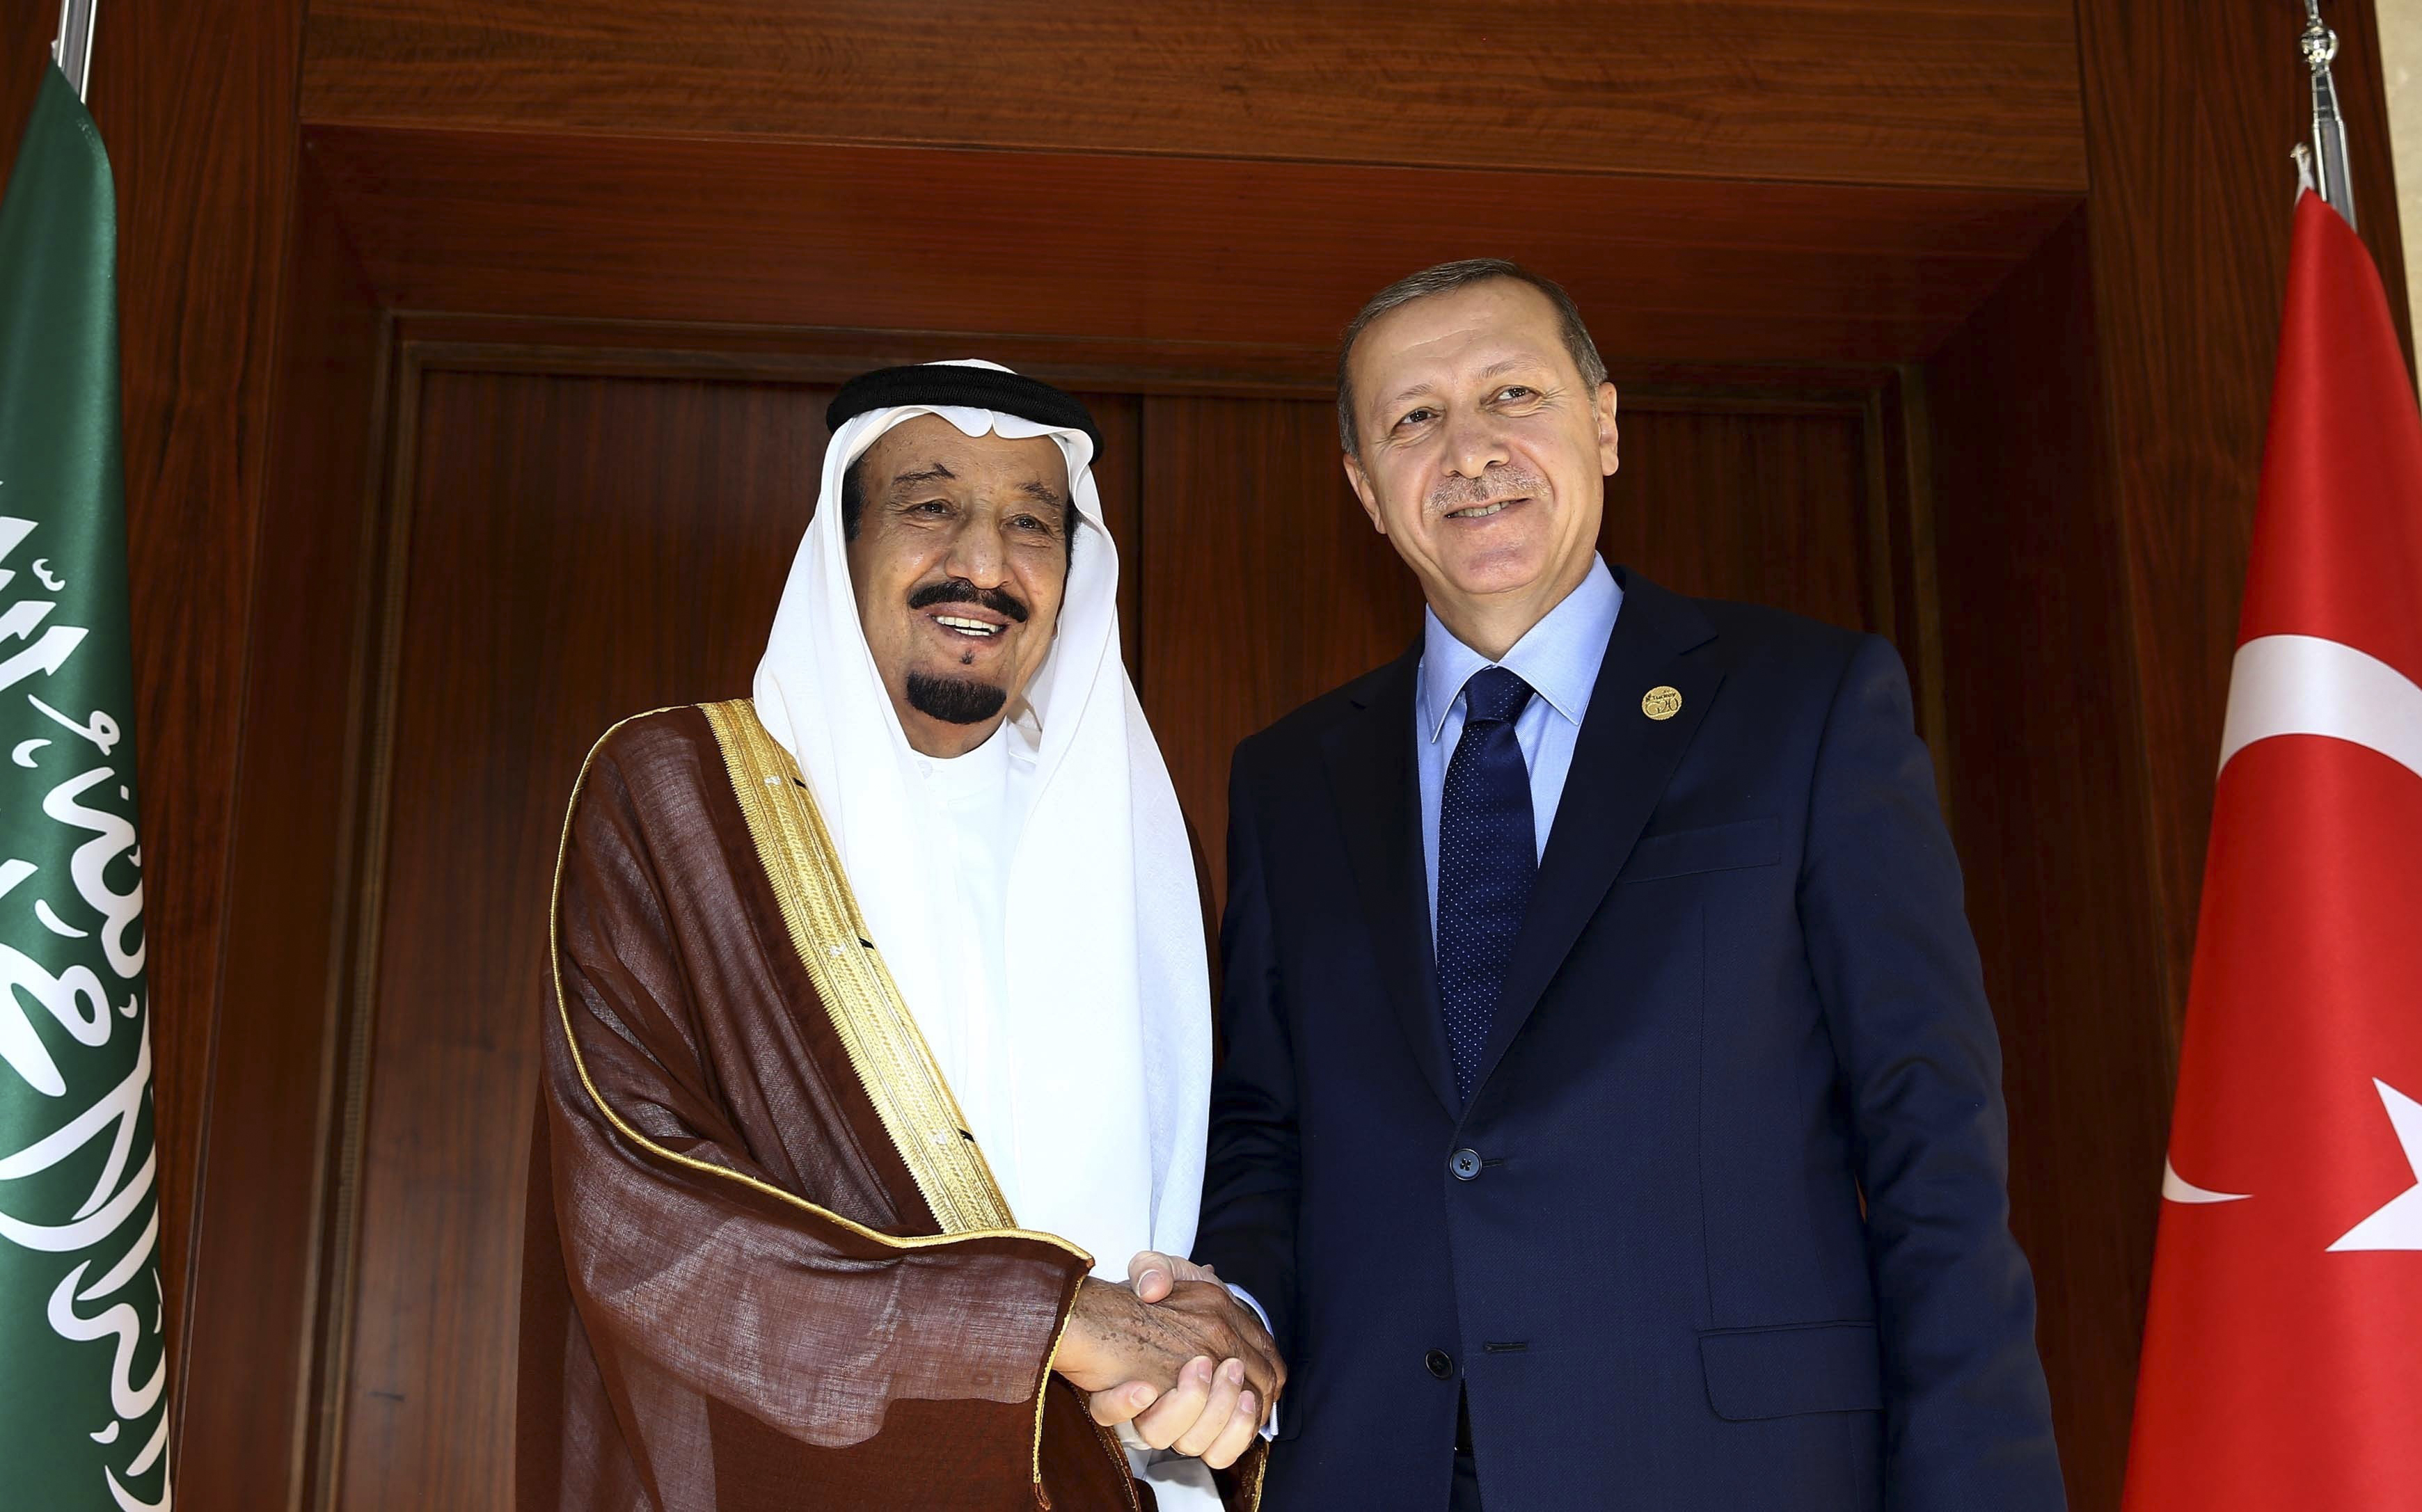 FILE - In this Saturday, November 14, 2015 file photo, Turkish President Recep Tayyip Erdogan right, shakes hands with Saudi King Salman bin Abdul Aziz Al Saud, left, prior to their meeting in Antalya, Turkey ahead of the upcoming G-20 summit. Photo: AP